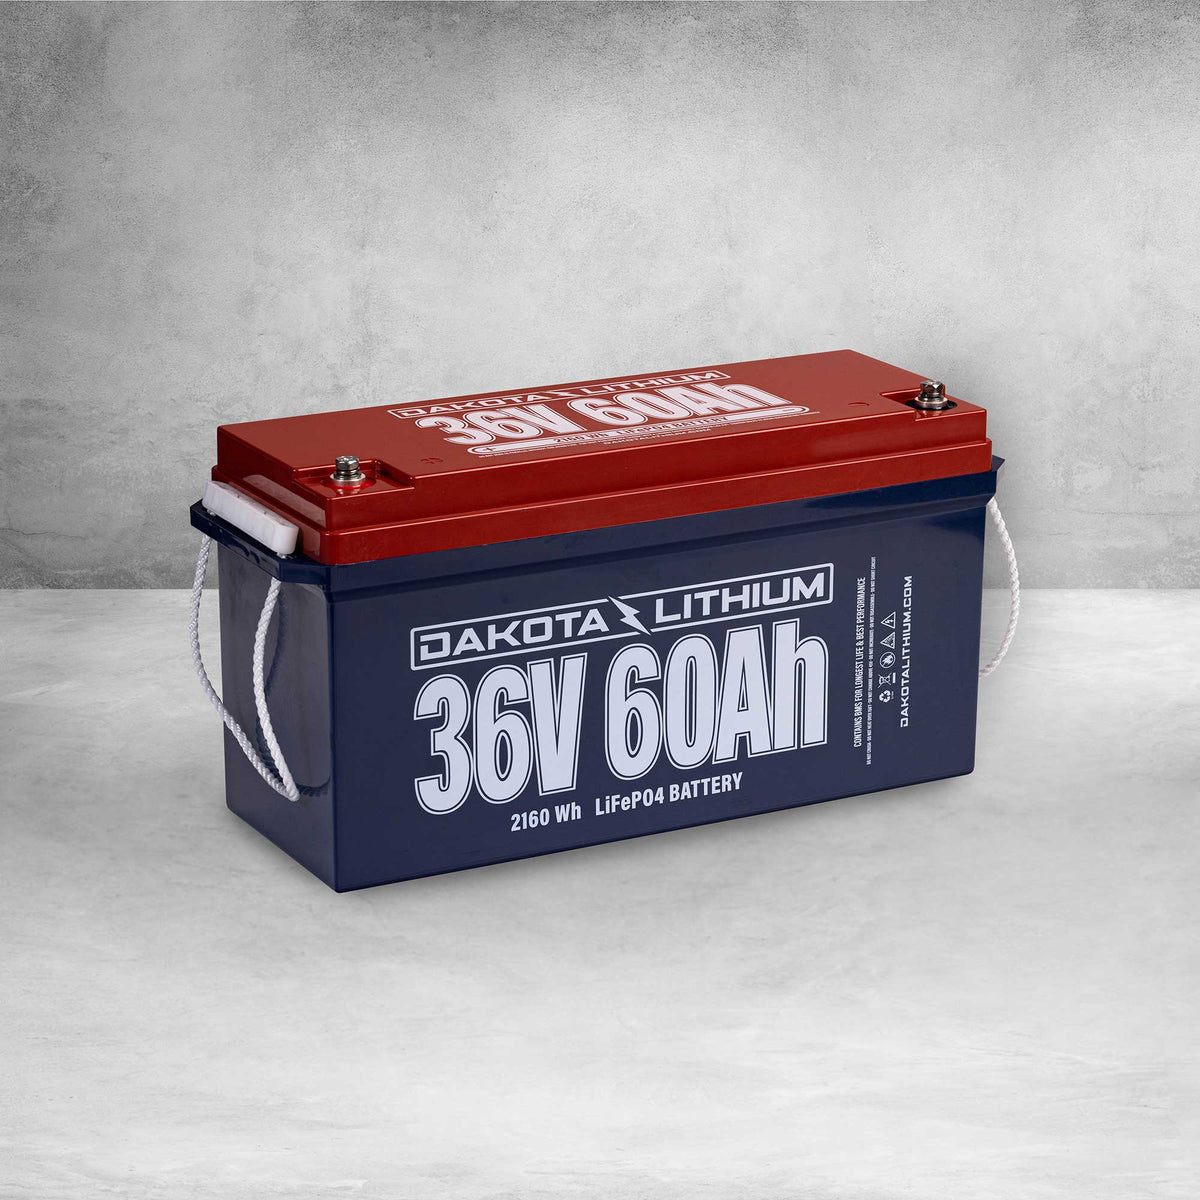 Dakota Lithium | 36V 60Ah Deep Cycle LiFePO4 Battery